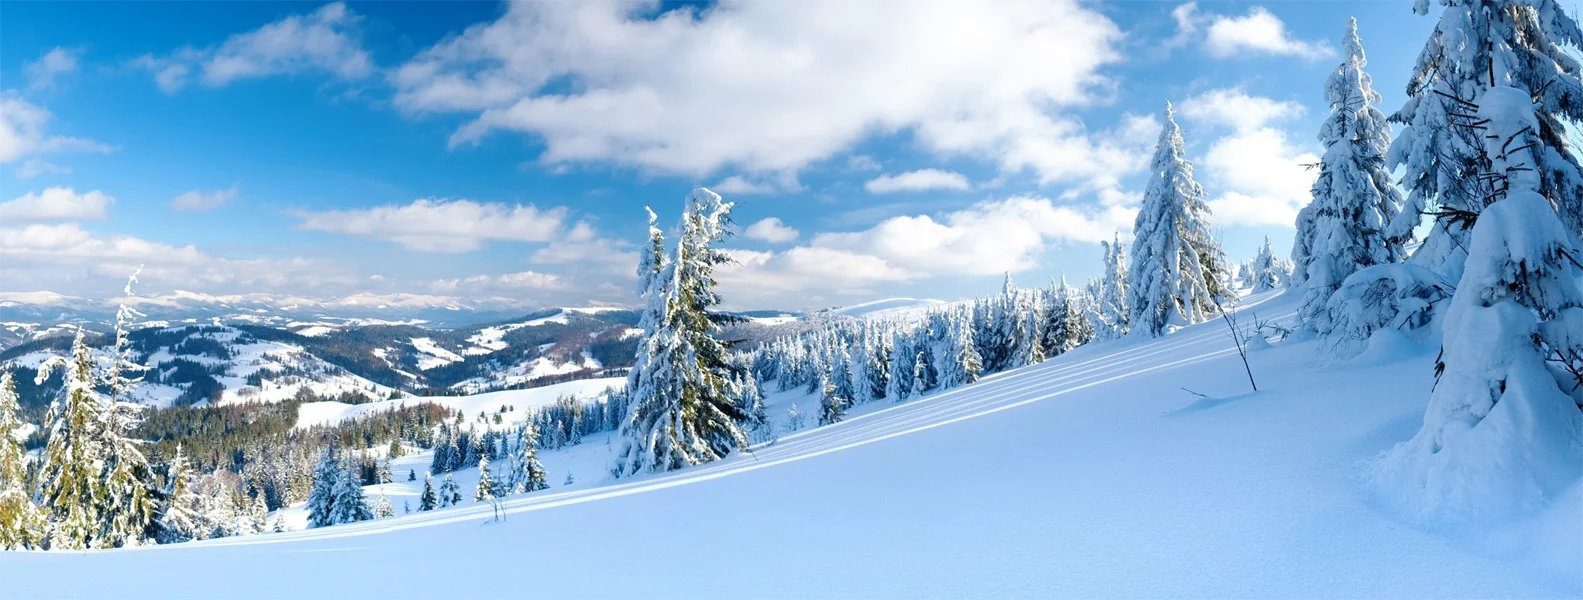 manali snow skiing